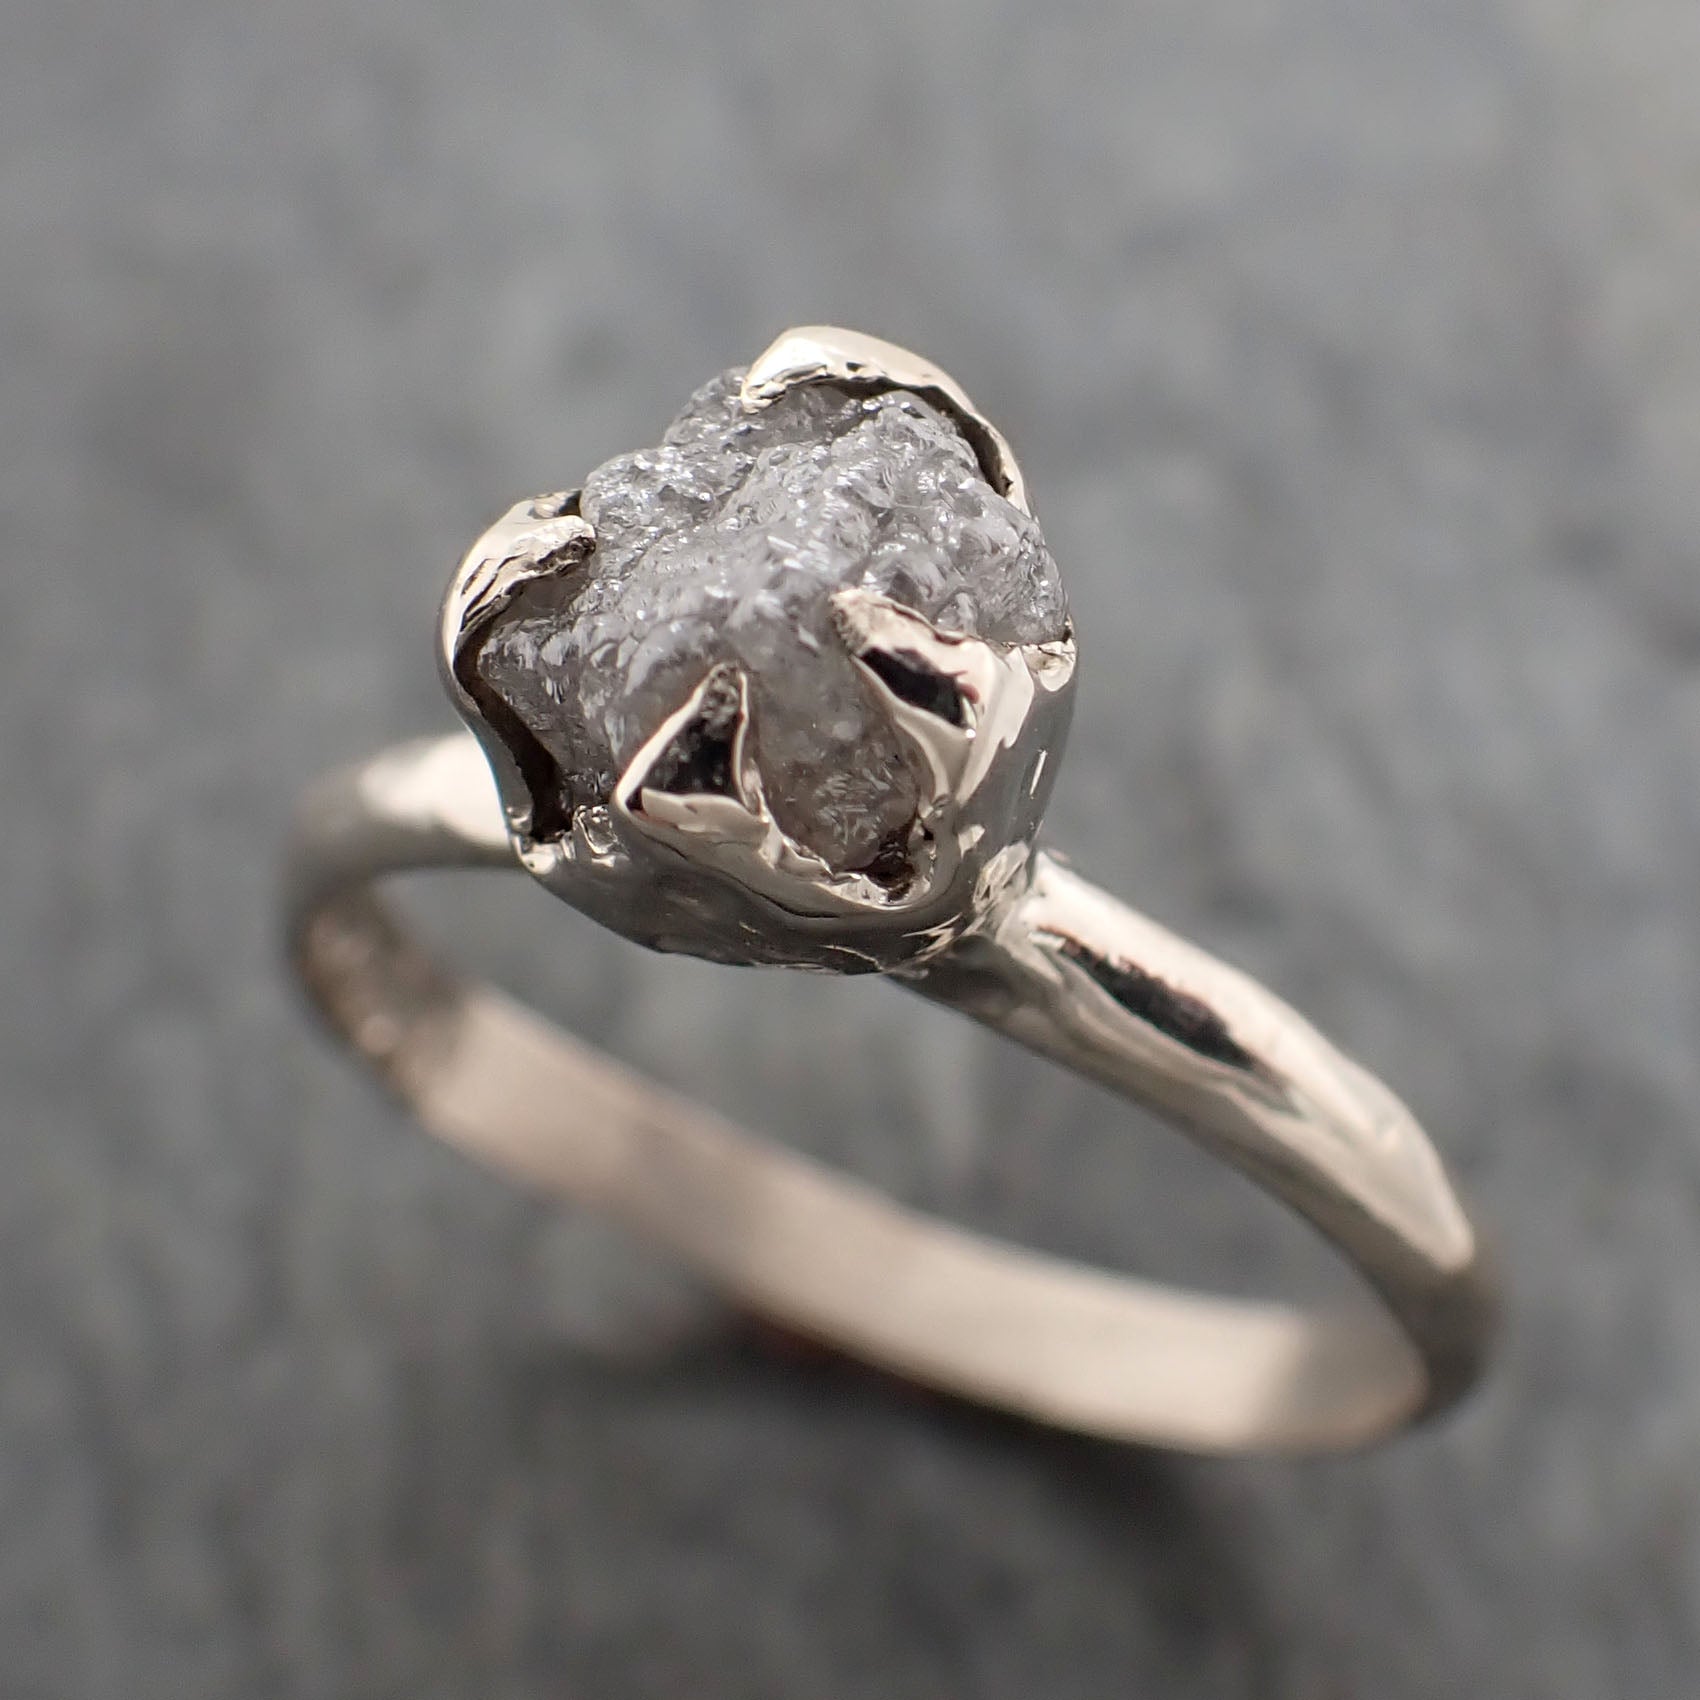 raw rough uncut diamond engagement ring solitaire 14k white gold conflict free diamond wedding promise 2328 Alternative Engagement